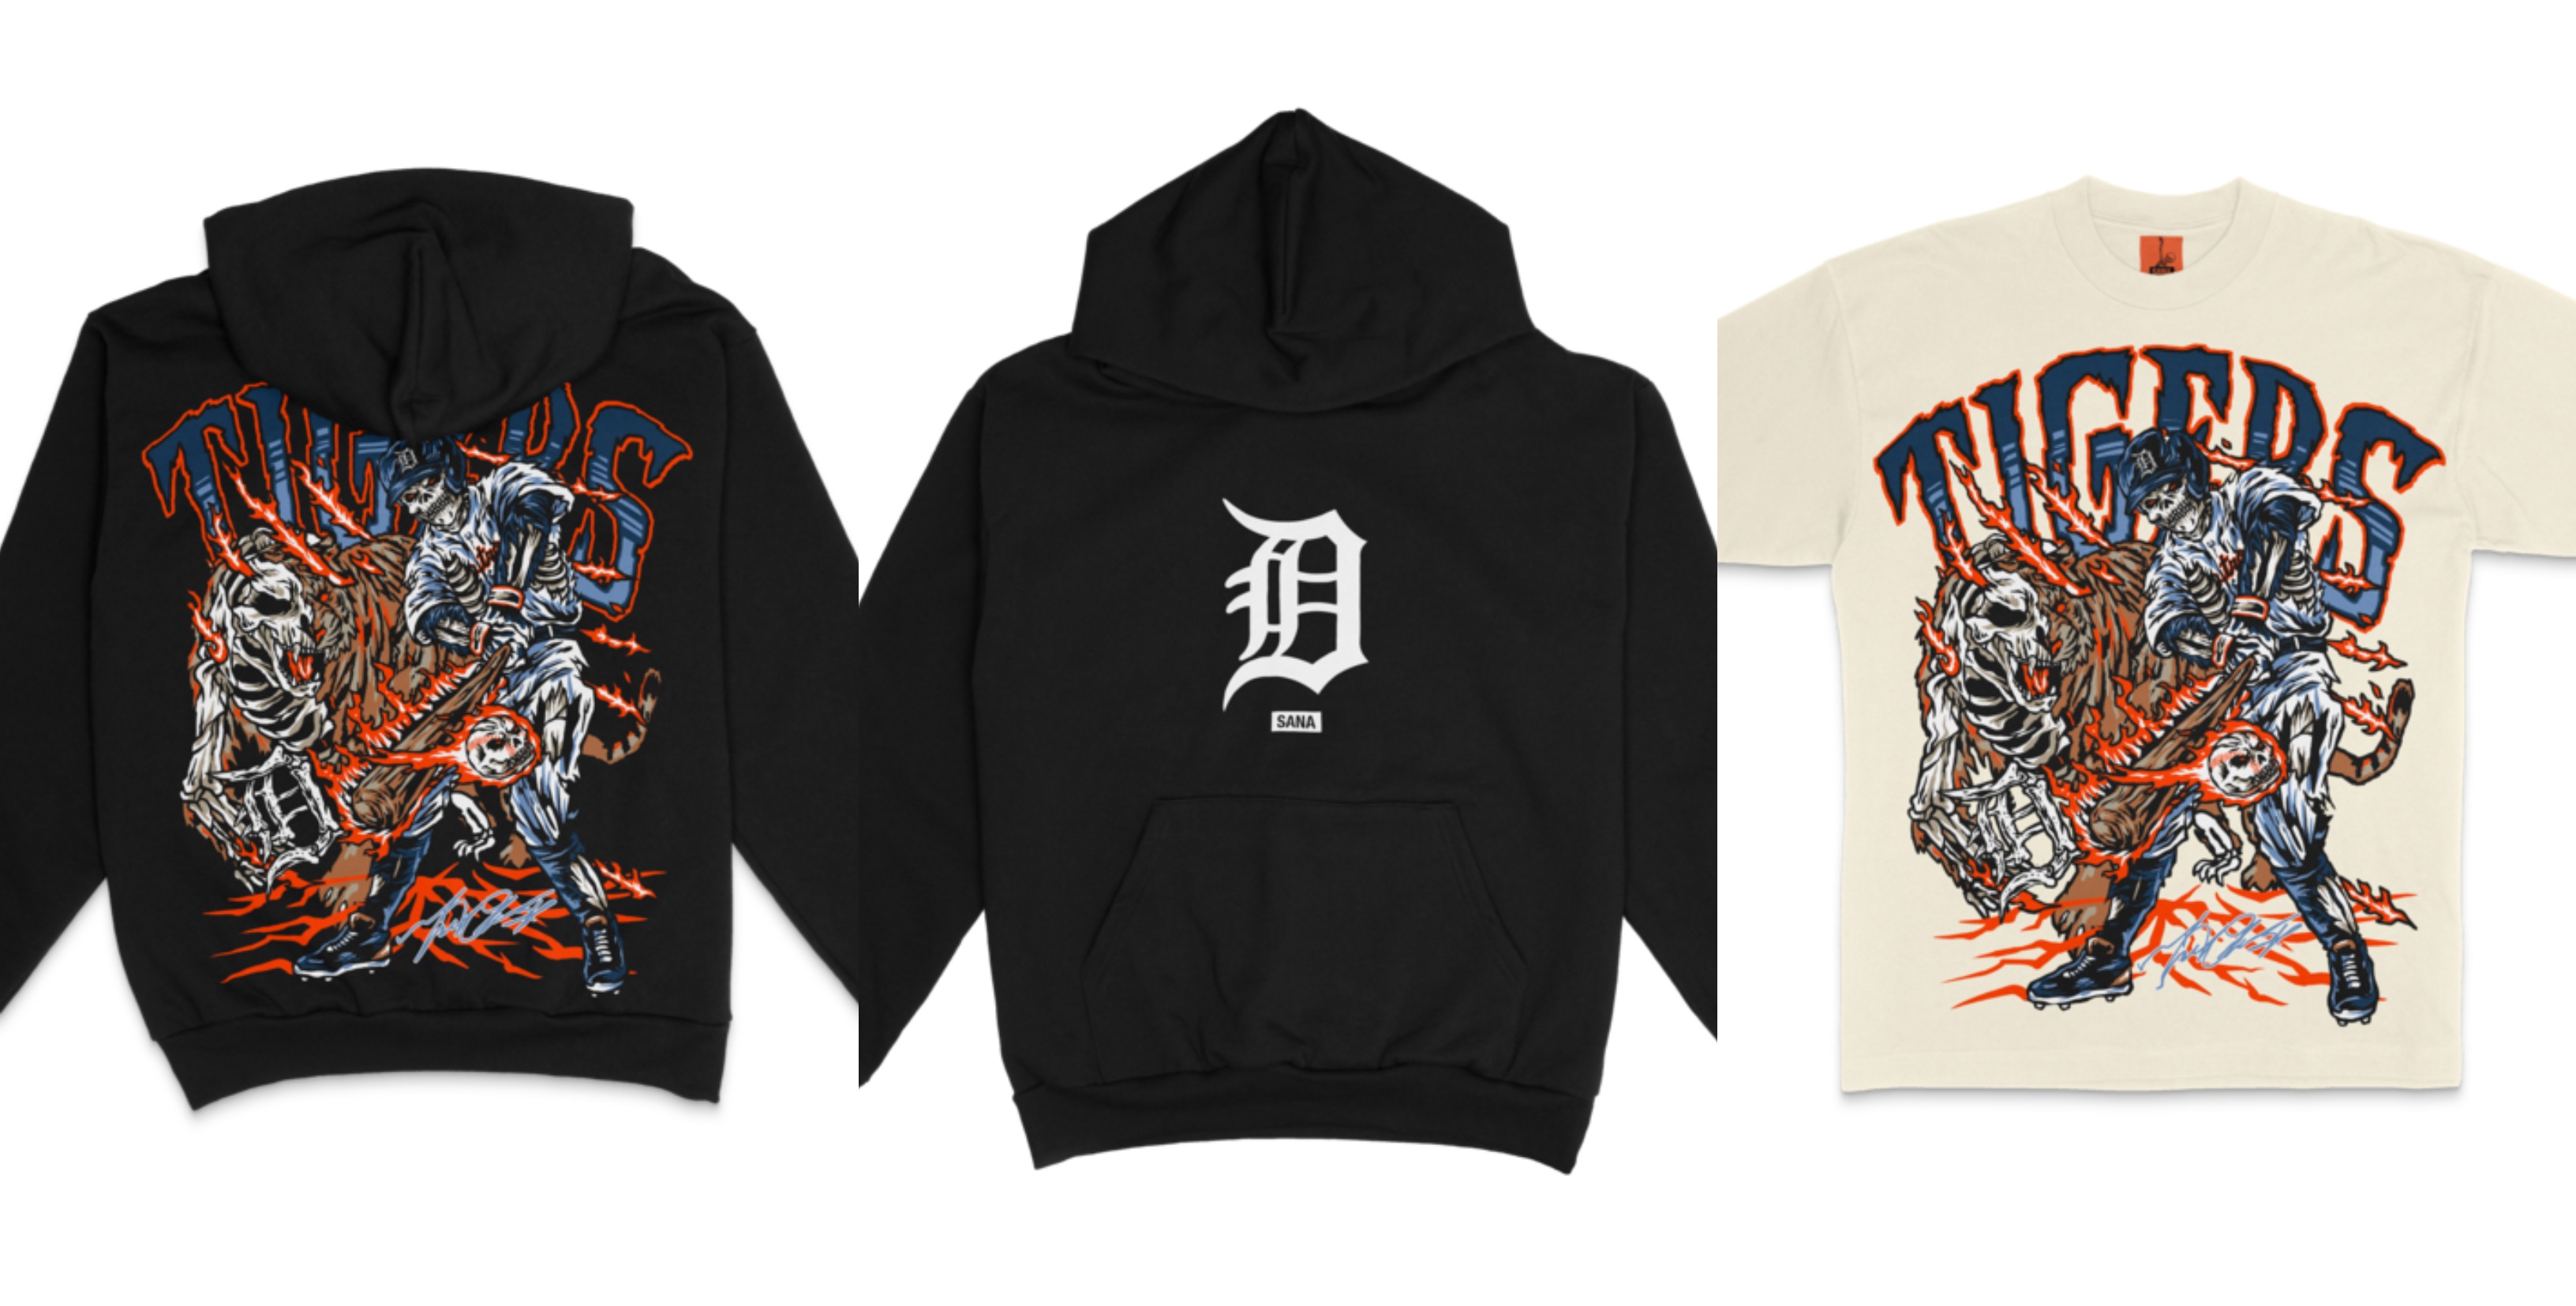 Sana Detroit Tigers Shirt, Custom prints store